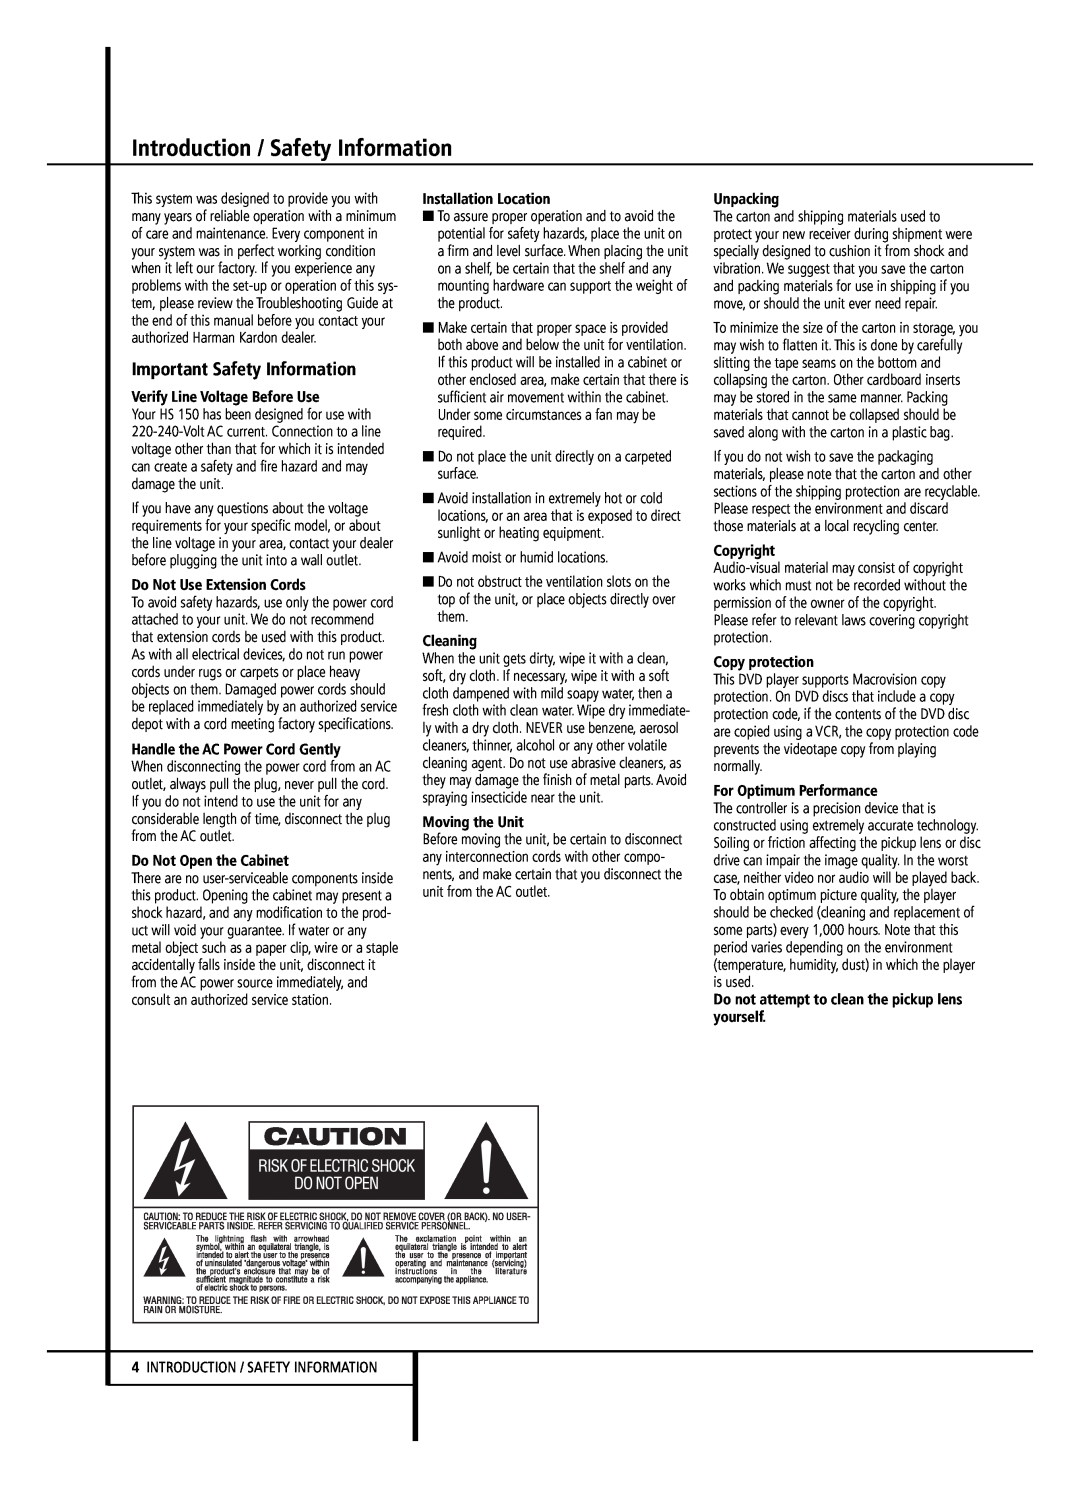 Harman-Kardon HS 150 owner manual Introduction / Safety Information, Important Safety Information 